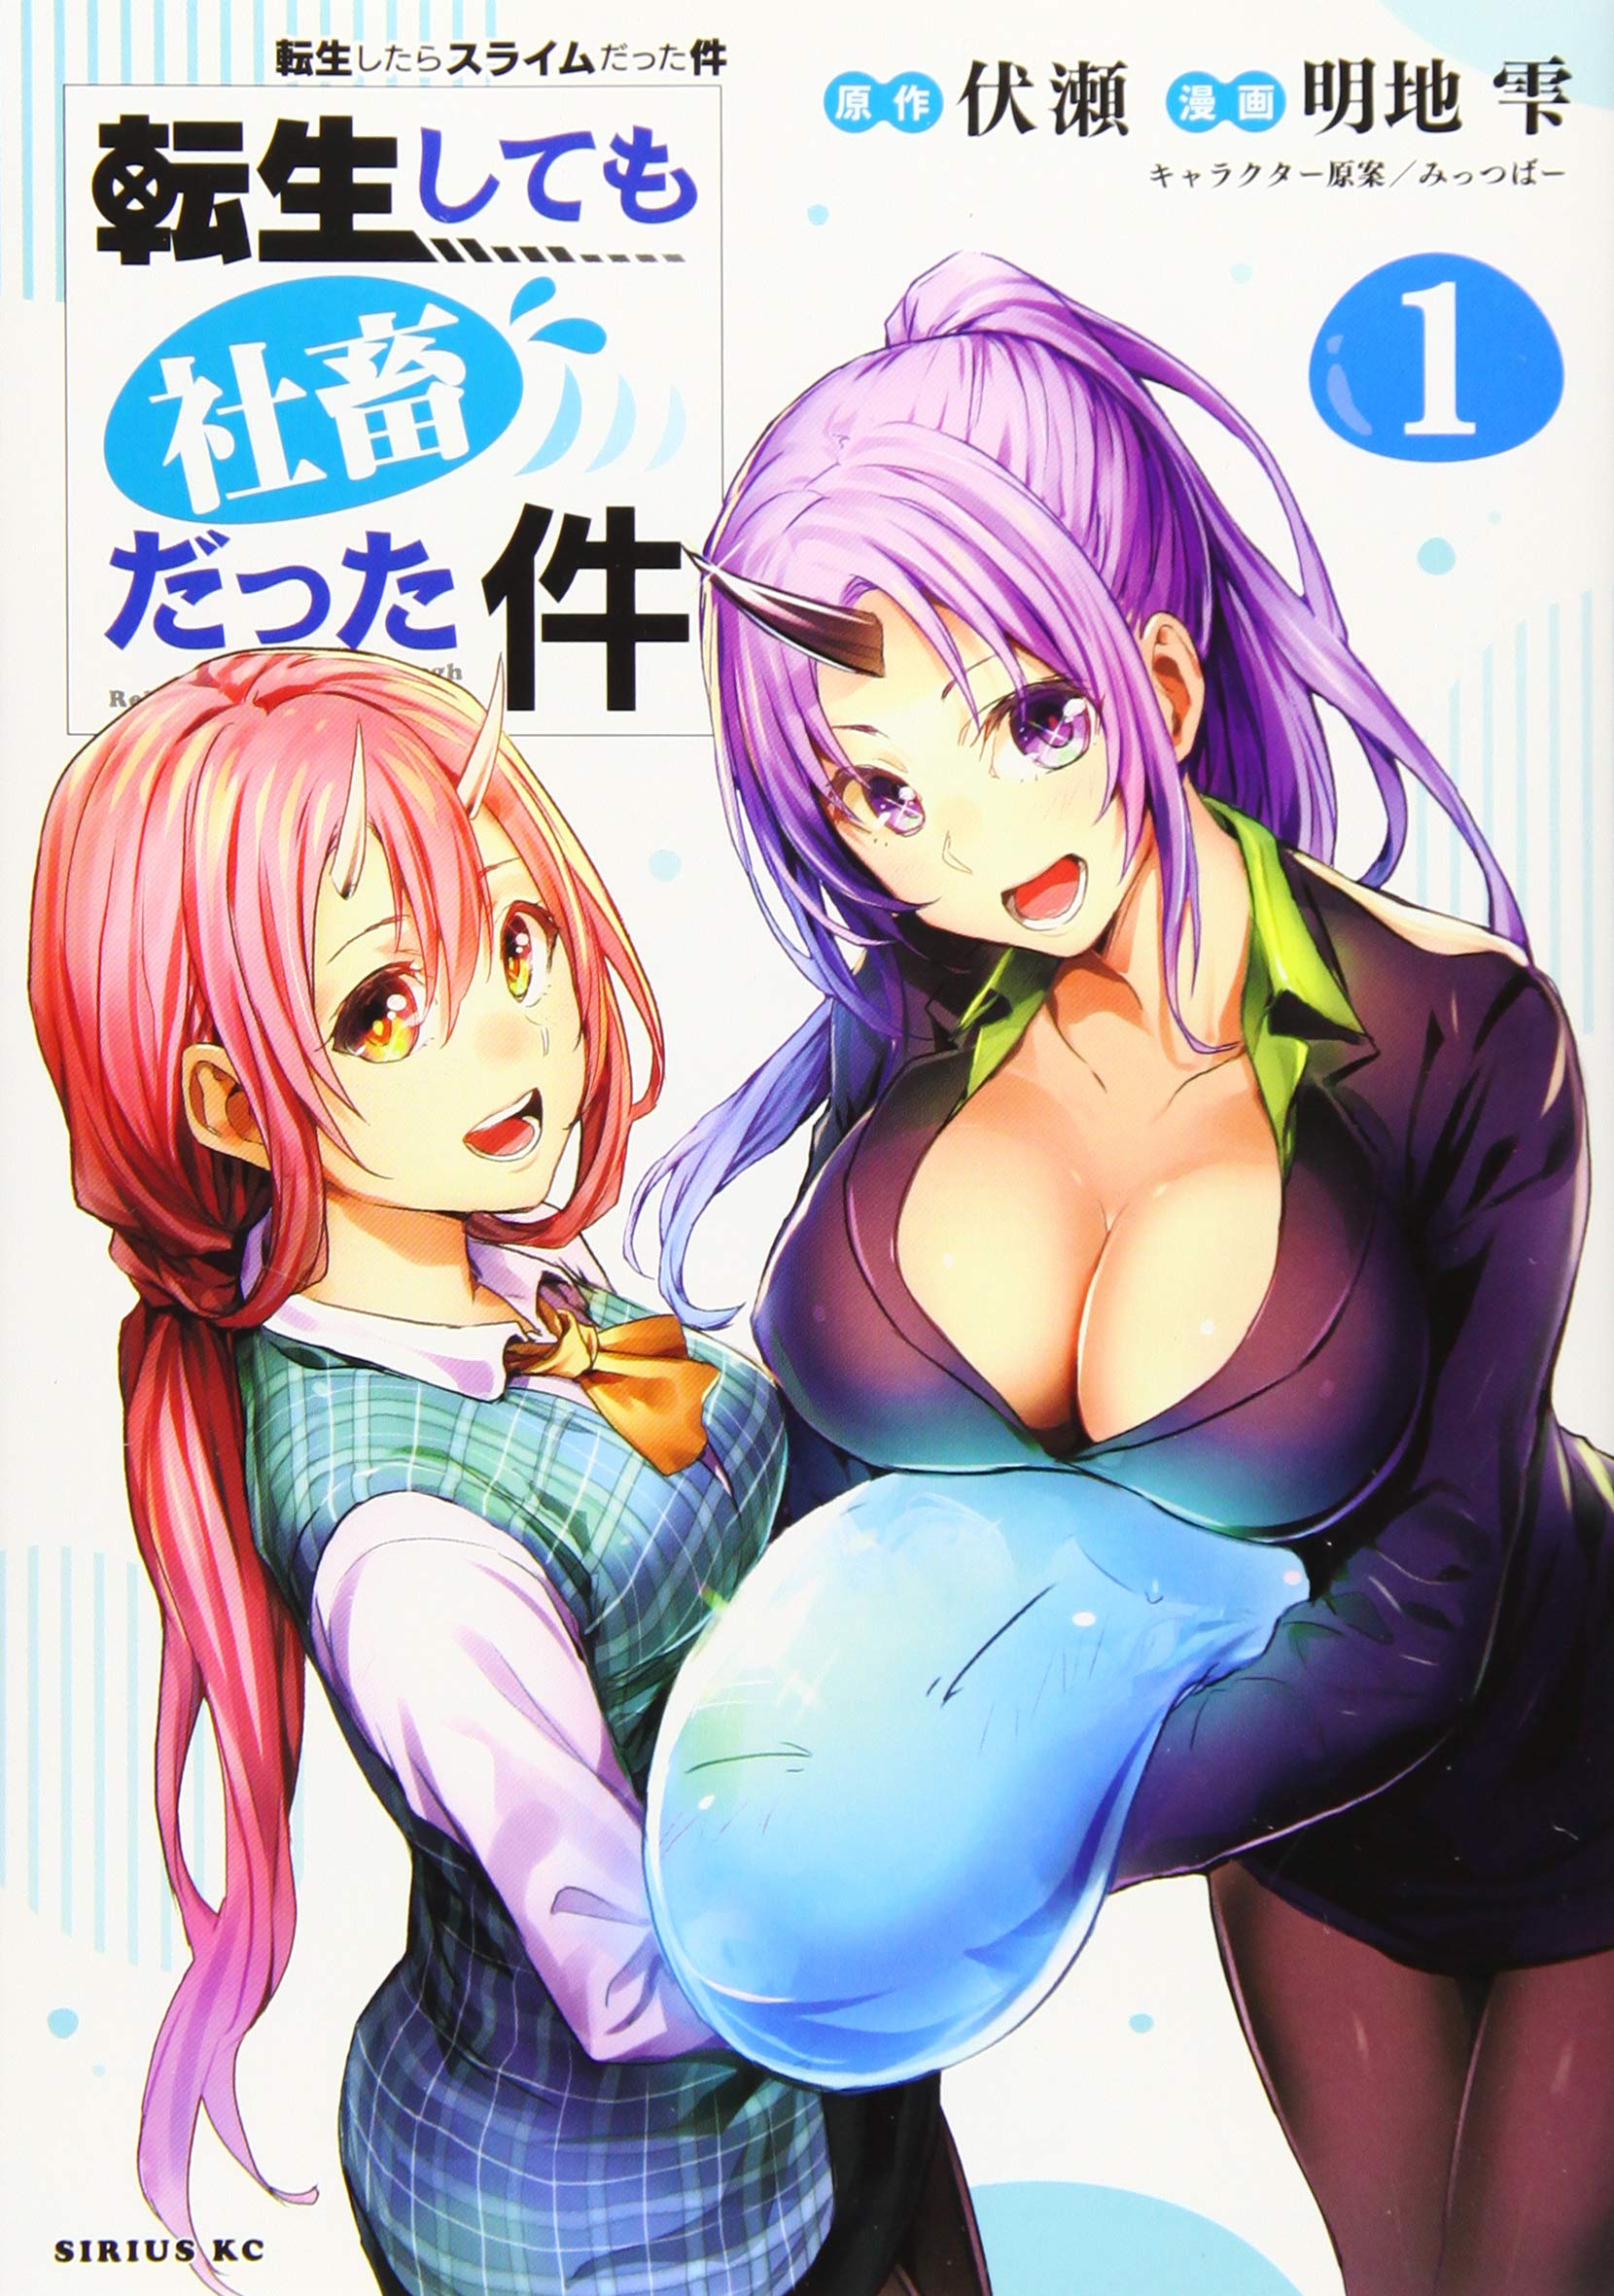 Toon Guru - ตัวอย่างใหม่ Tensei Shitara Slime Datta Ken: Coleus no Yume  (OVA, มี 3 ตอน) วางจำหน่าย/สตรีมในญี่ปุ่น 1 พ.ย. นี้ * คลิปในคอมเมนต์ *  TenSura ภาค 3 ฉายช่วง เม.ย. 24 . เนื้อหาจากนิยายที่เขียนใหม่ในช่วงครบรอบ 10